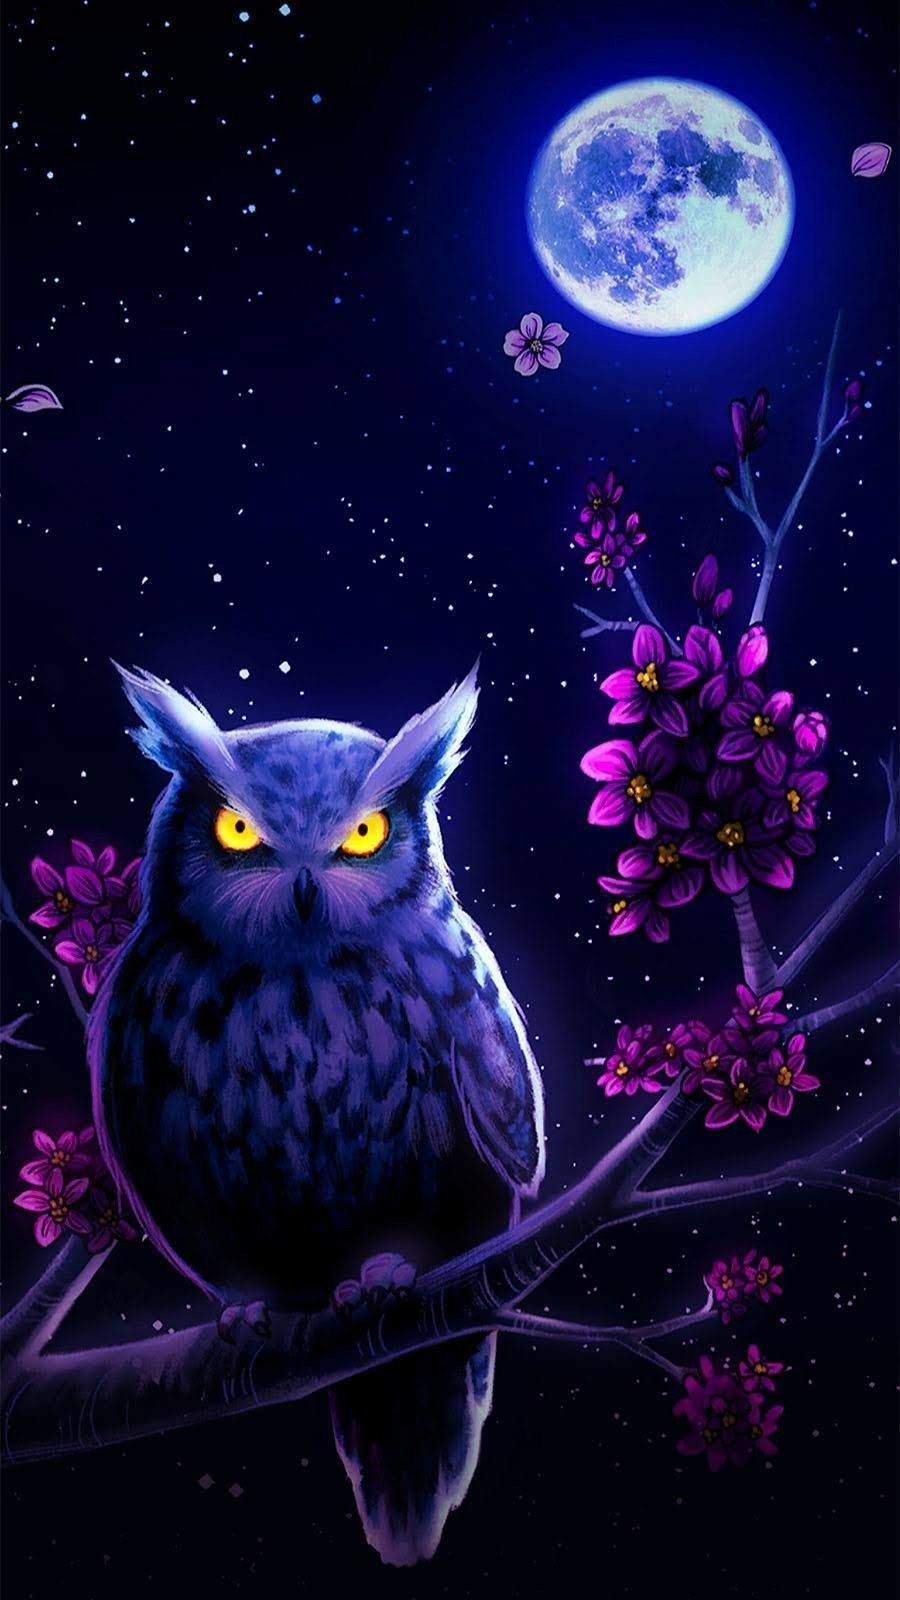 Night owl. Owl wallpaper, Owl wallpaper iphone, Beautiful dark art